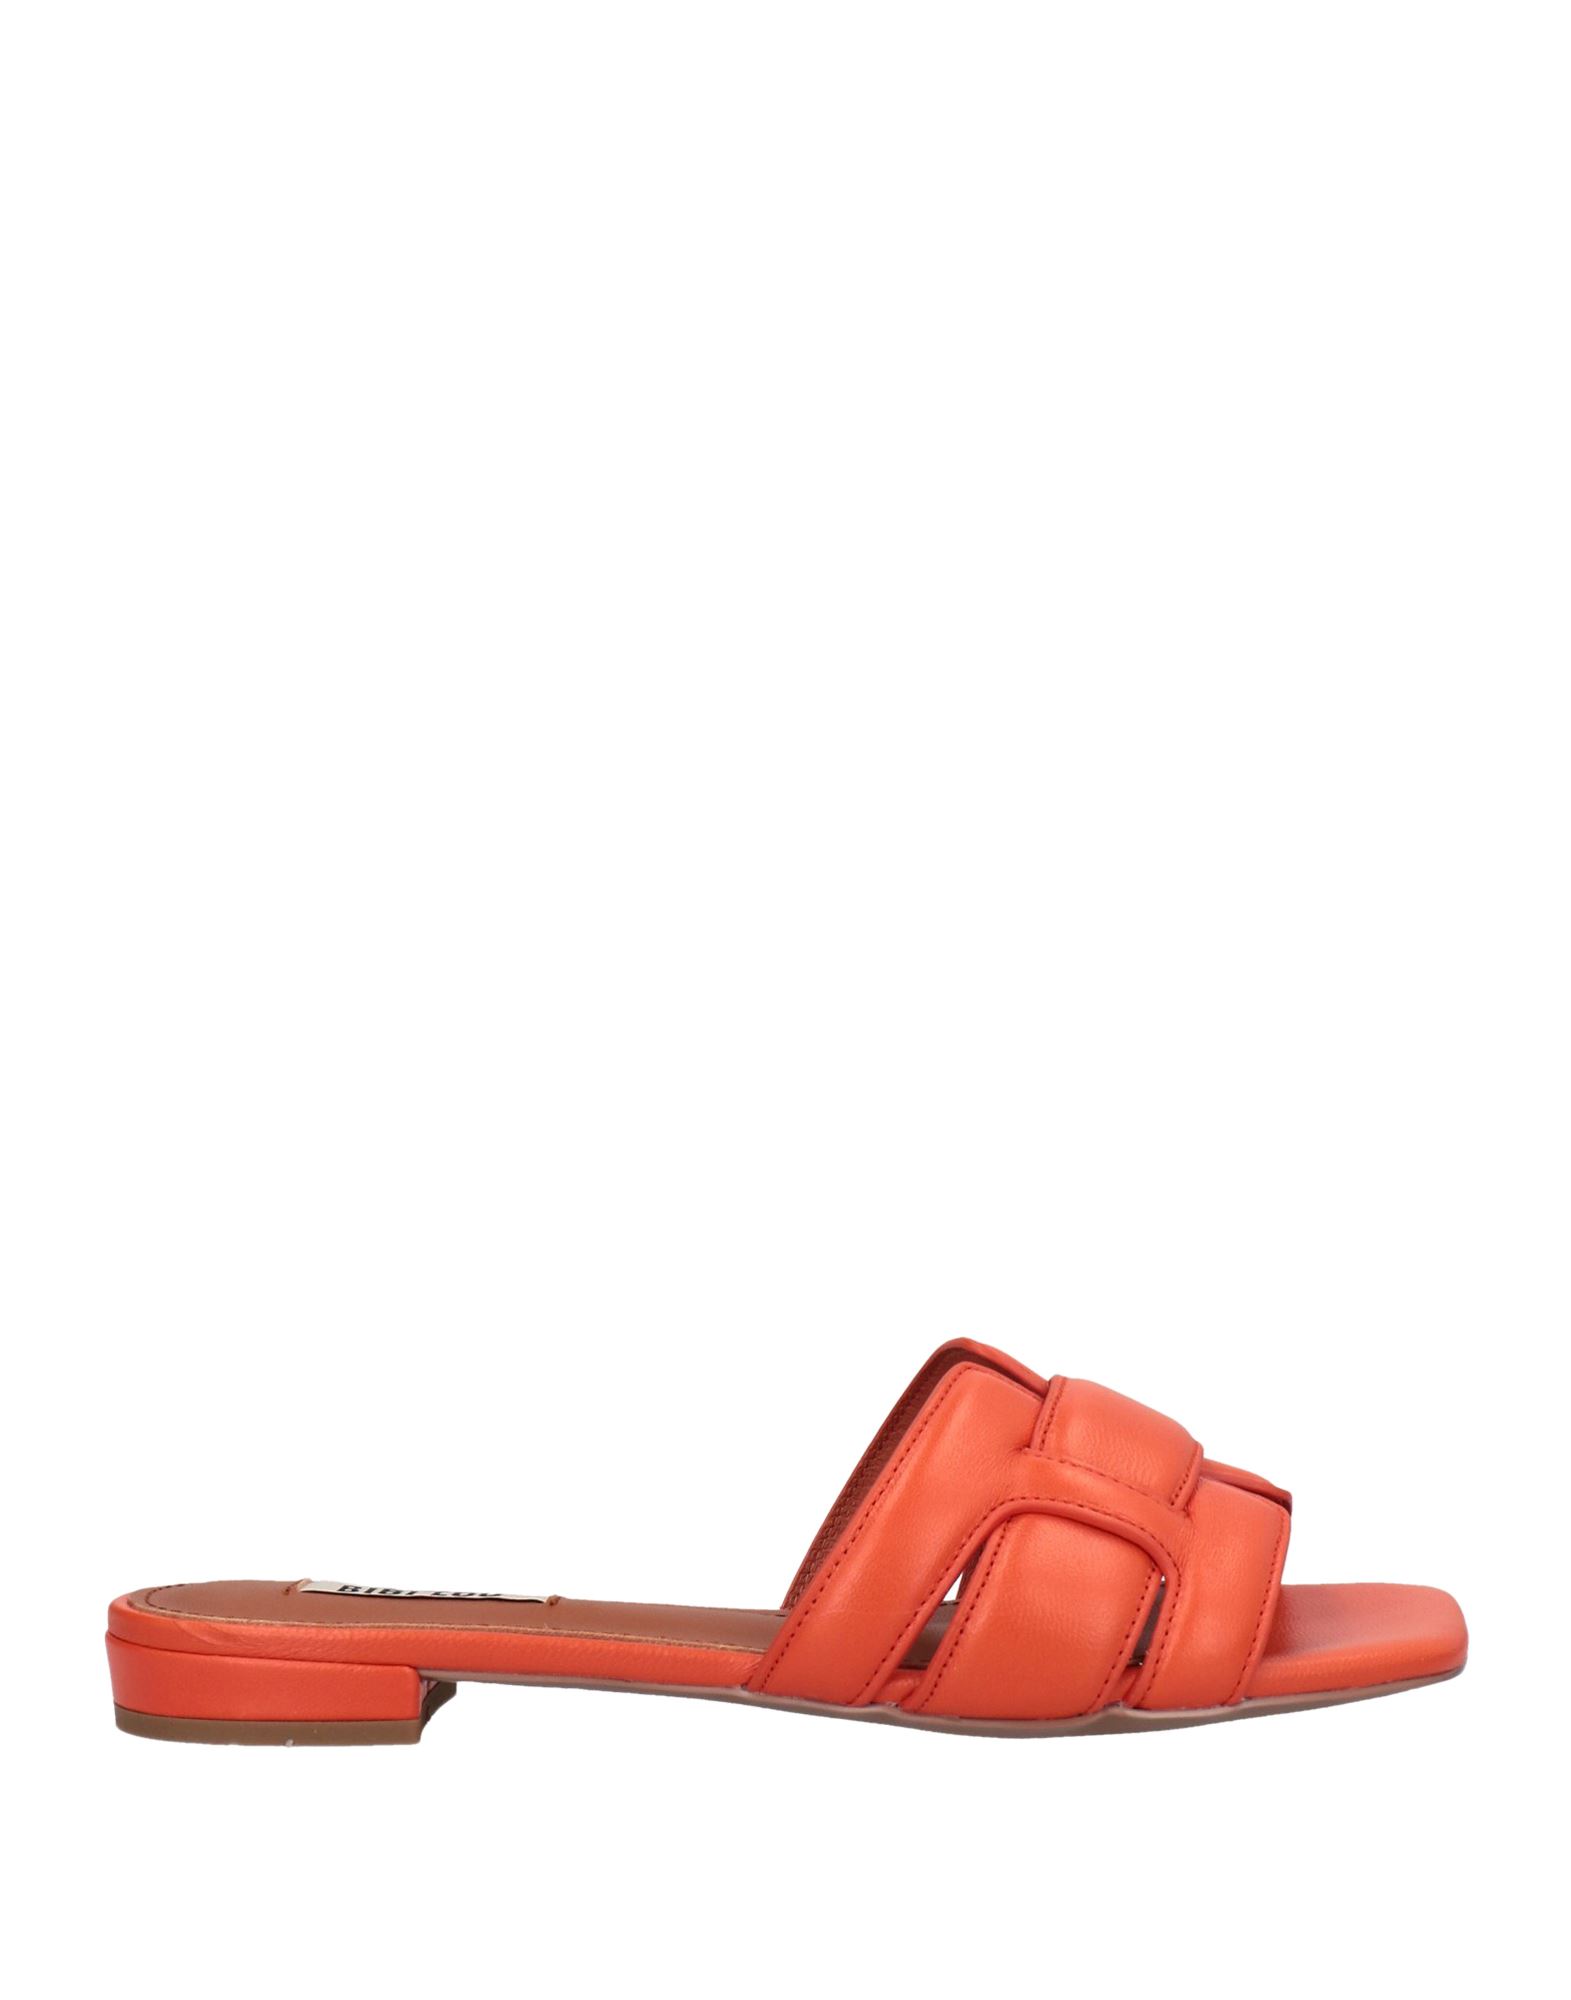 Bibi Lou Sandals In Orange